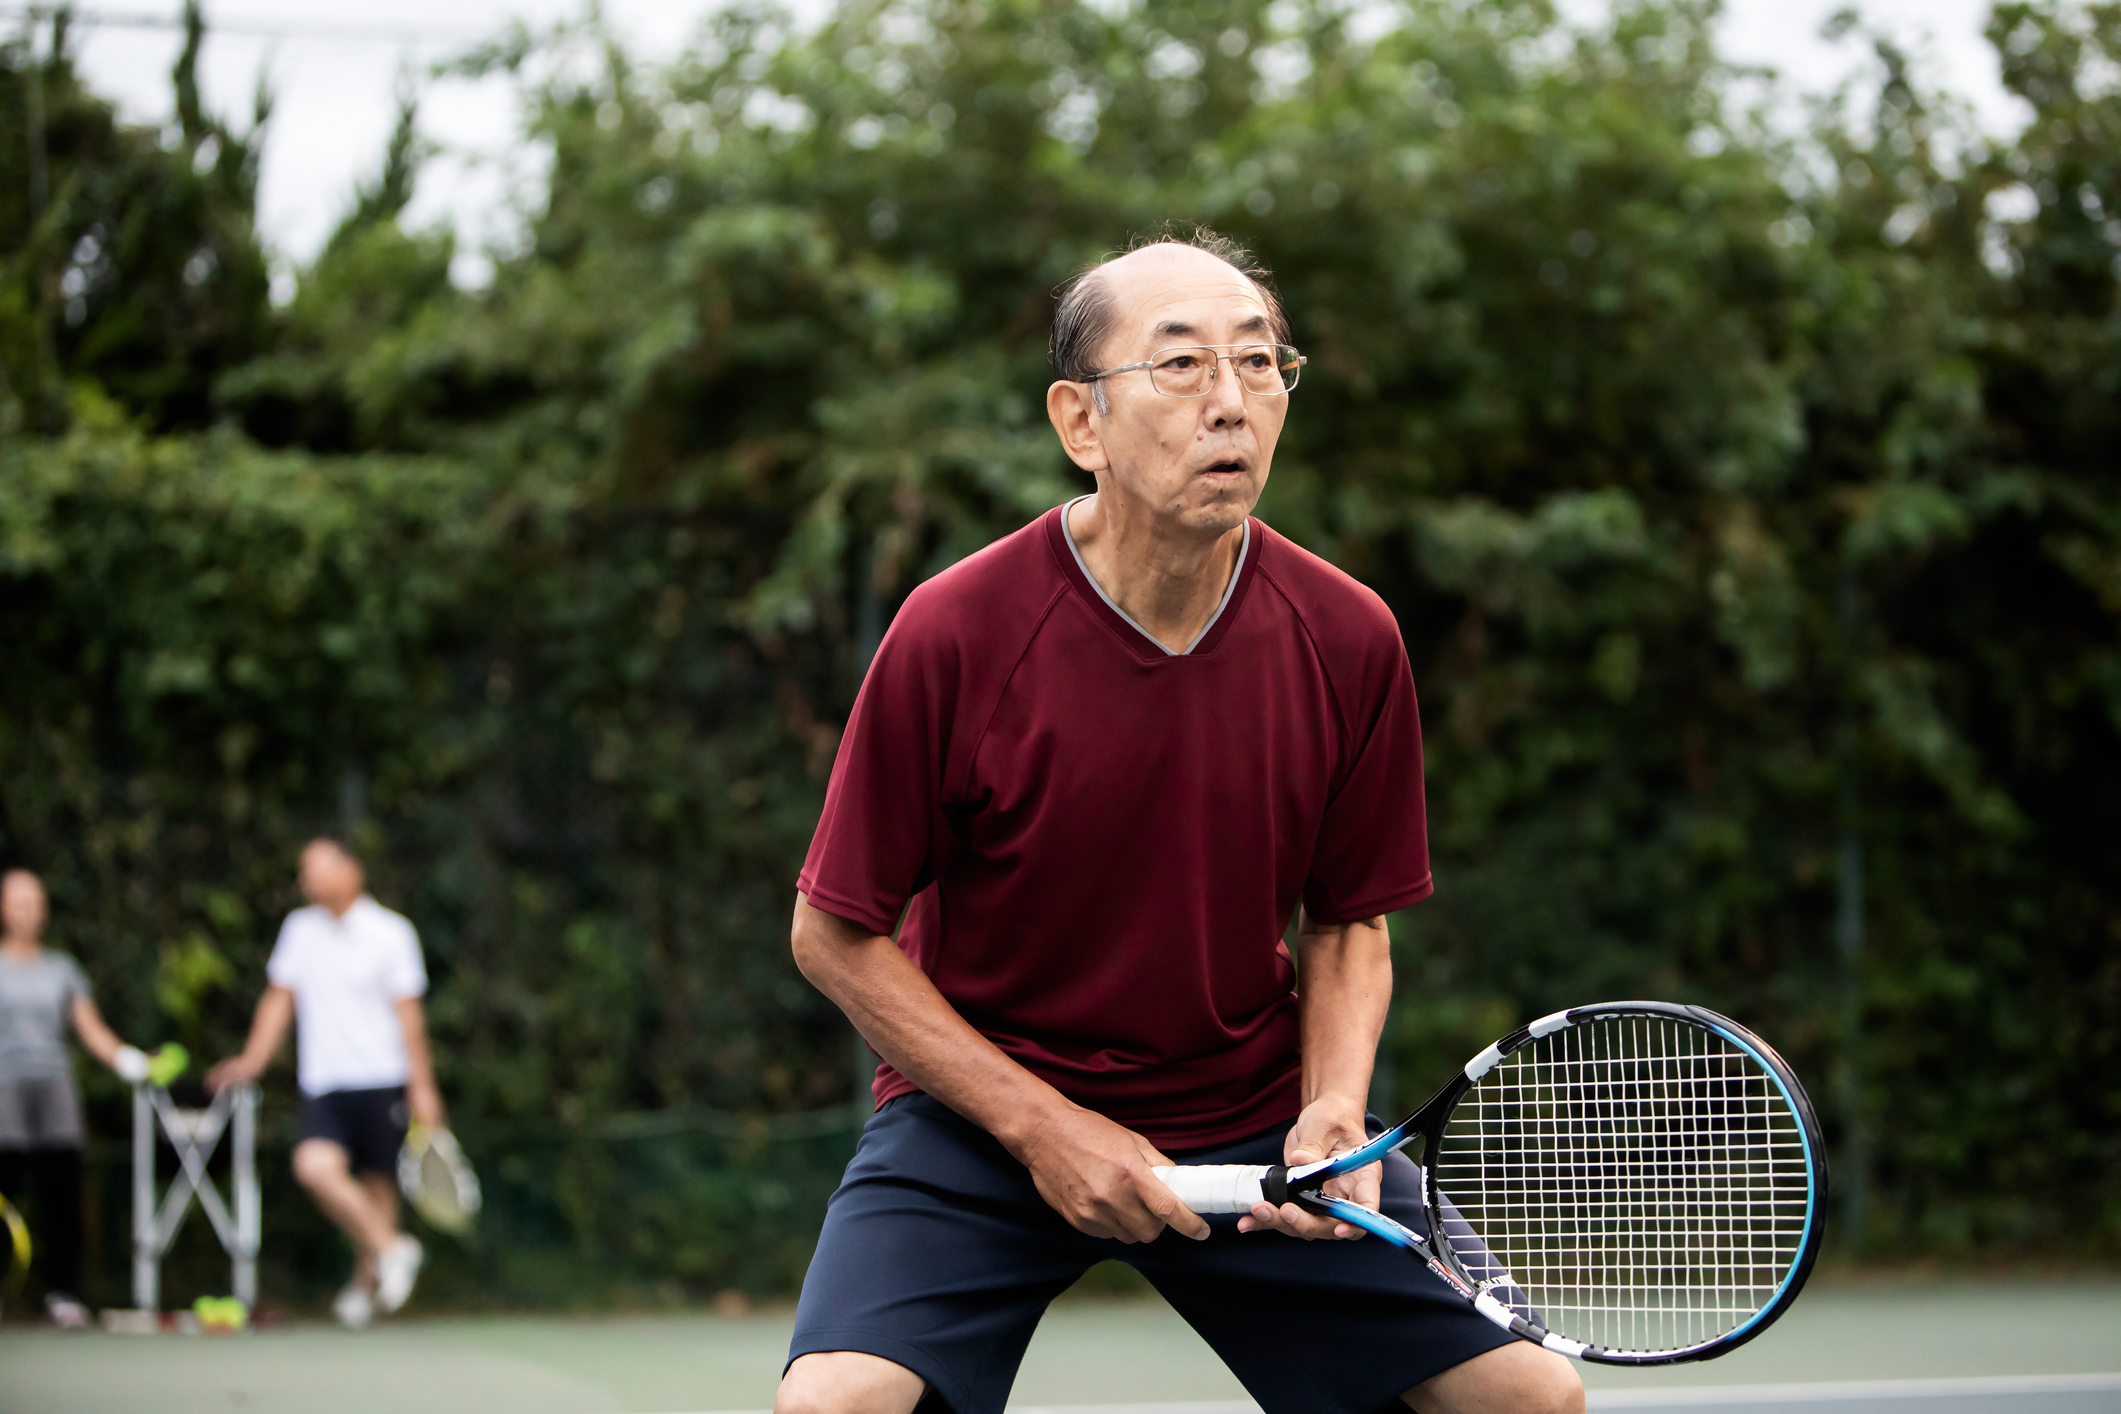 An older man is playing tennis